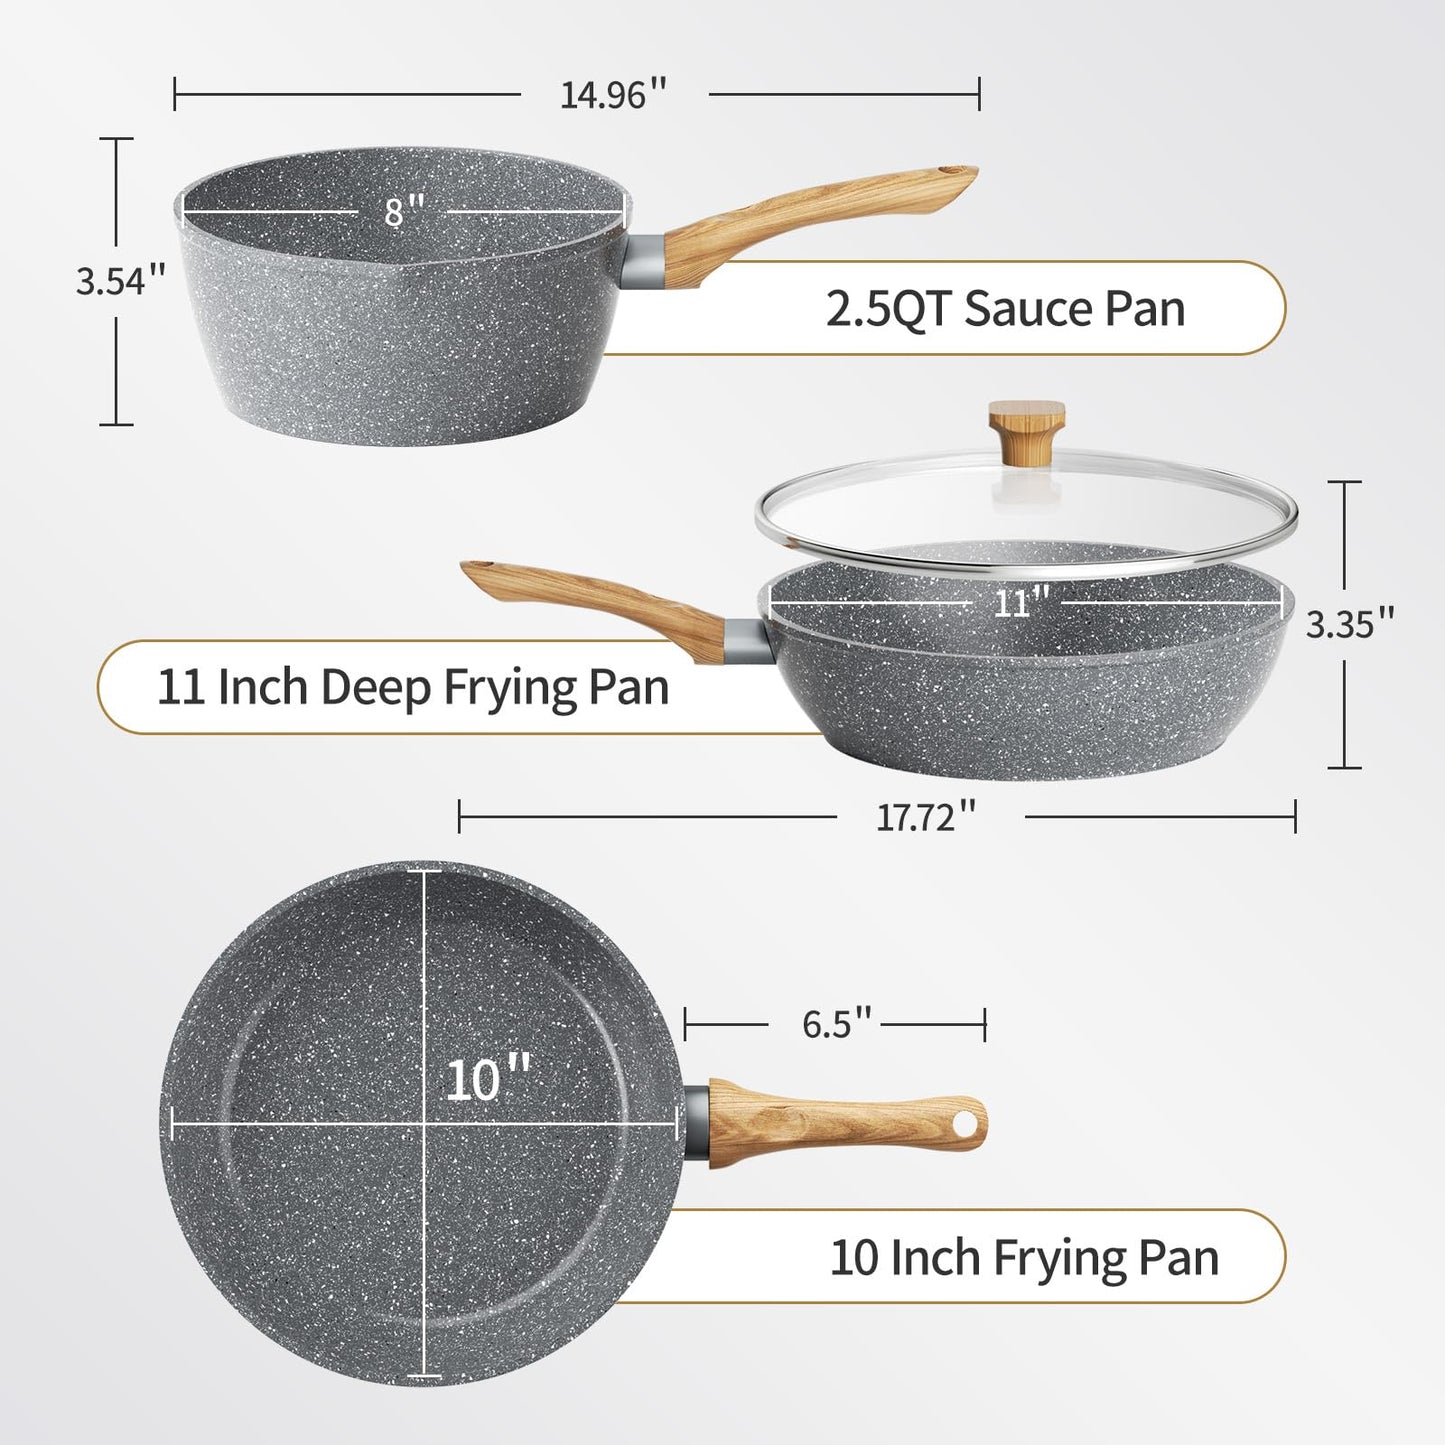 Frying Pan Set With Lids - Nonstick Cookware Set 5 Pcs, 2.5Qt Sauce Pan & 10 Inch Skillet & 11 Inch Deep Frying Pan, Non toxic Kitchen Cooking Set,PFOA Free